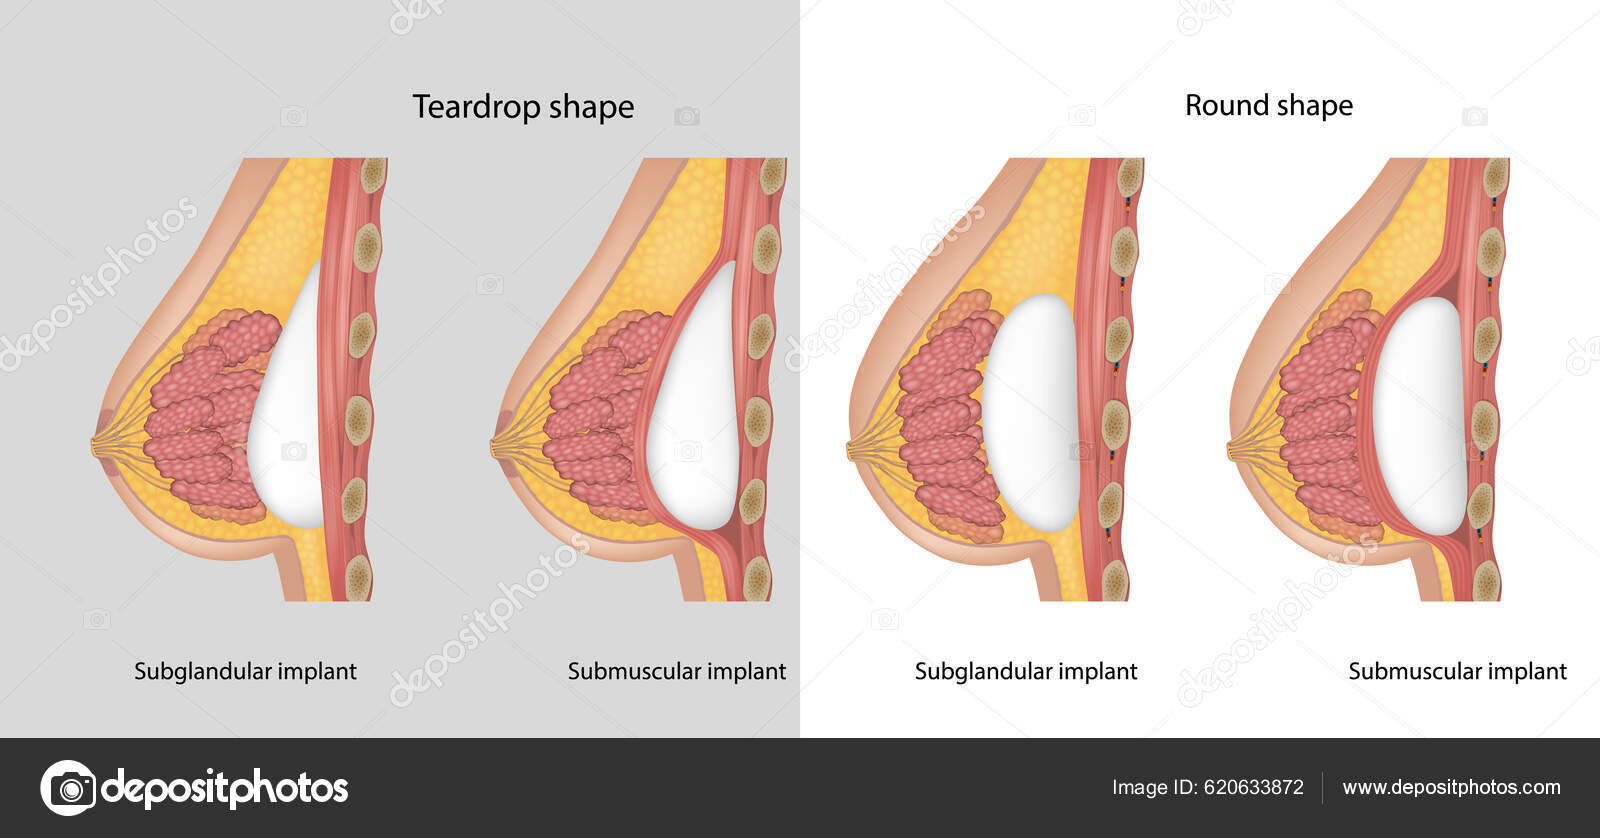 https://st5.depositphotos.com/4460429/62063/v/1600/depositphotos_620633872-stock-illustration-subglandular-submuscular-breast-implants-breast.jpg